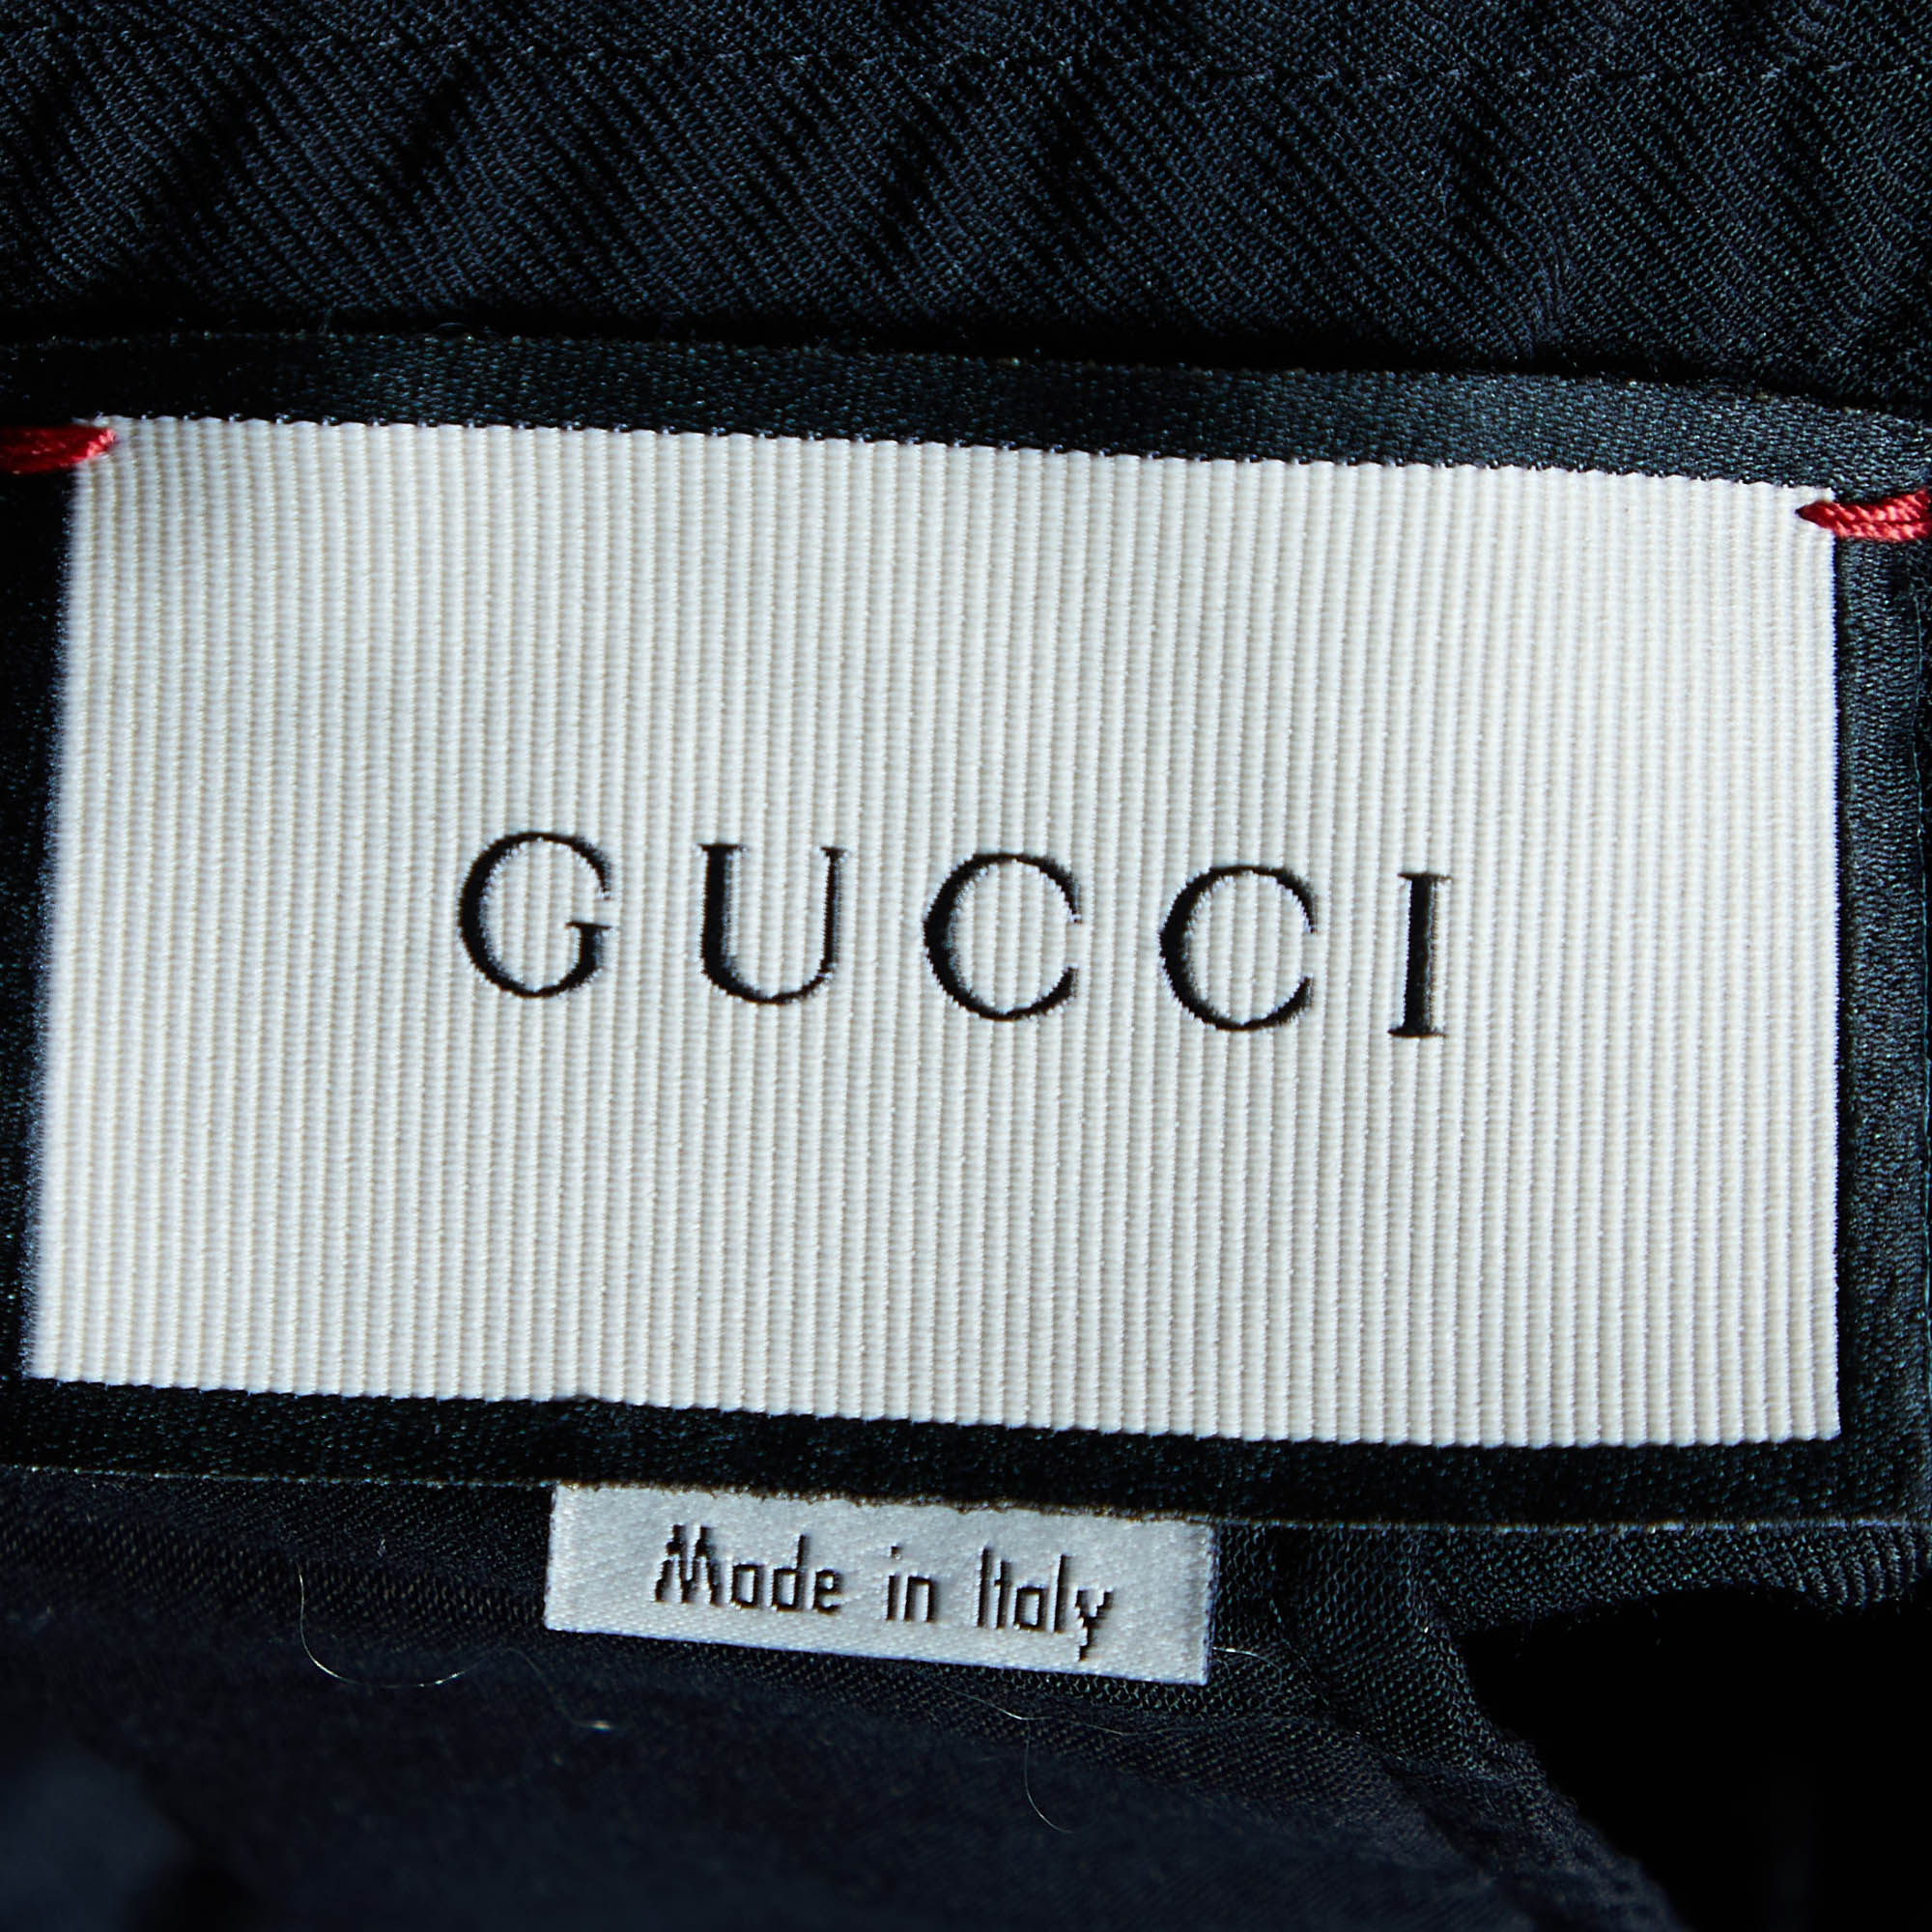 Gucci Black Wool & Mohair Web Striped Drawstring Pants XL